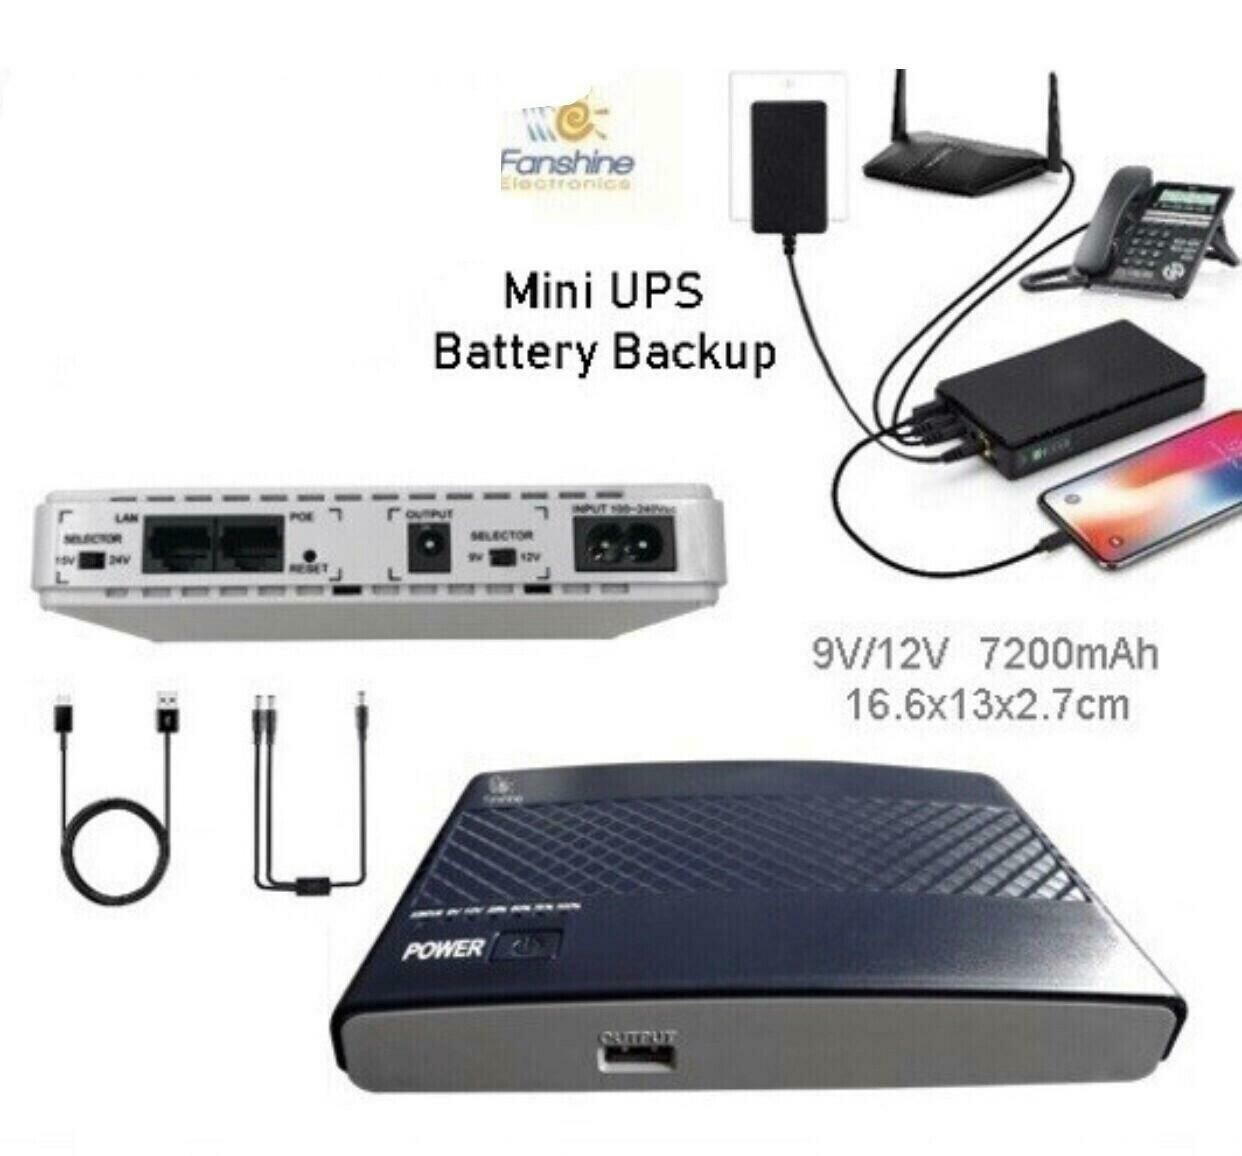 Mini UPS Battery Backup